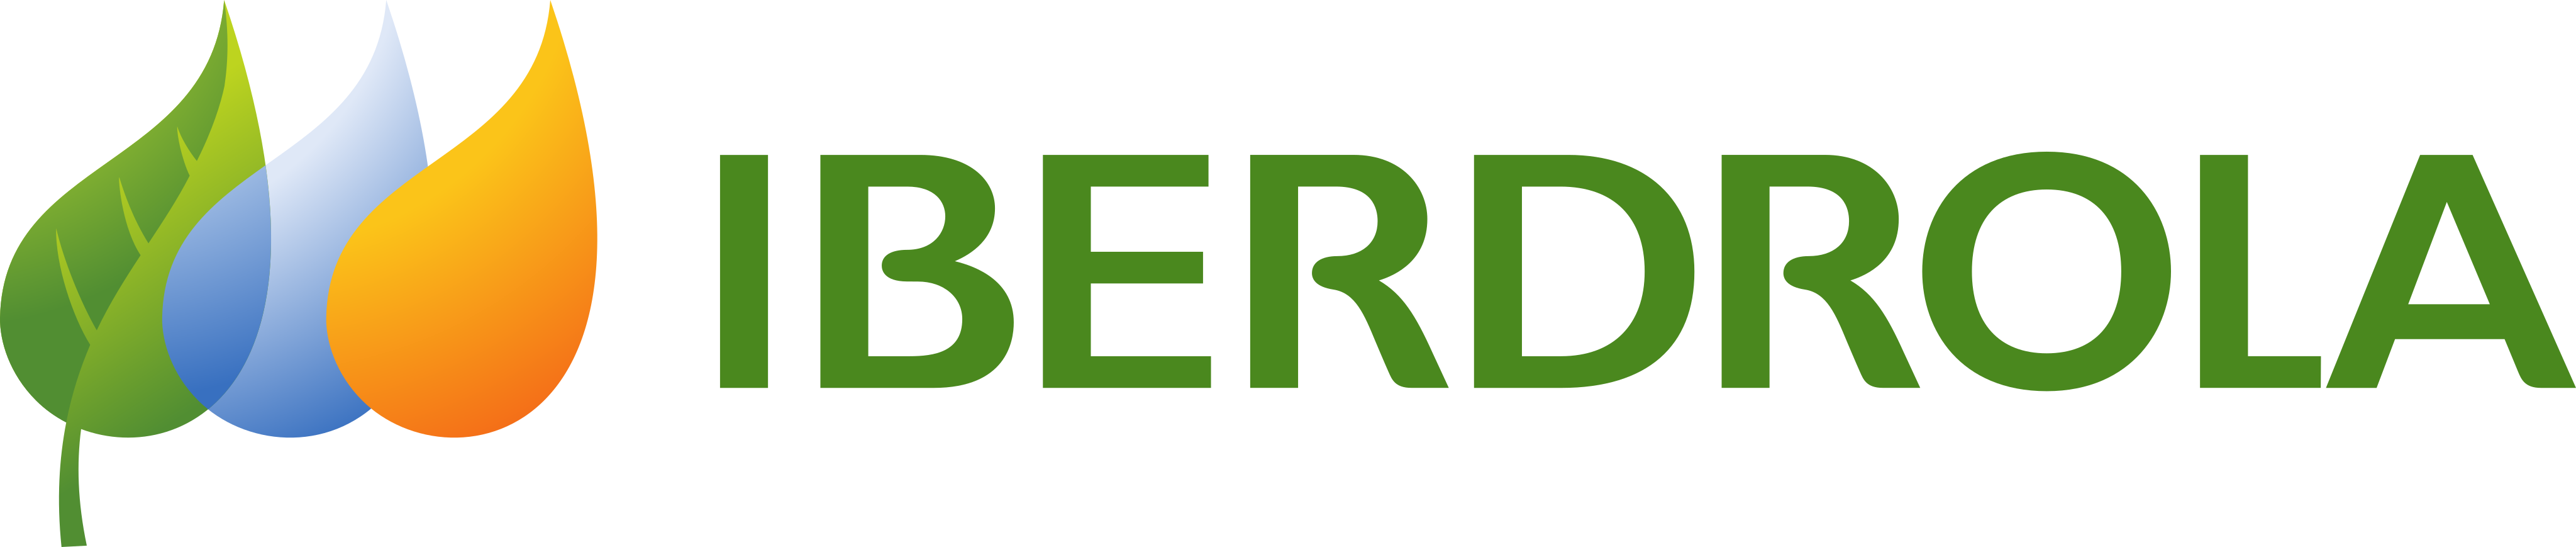 Iberdrola S.A. logo